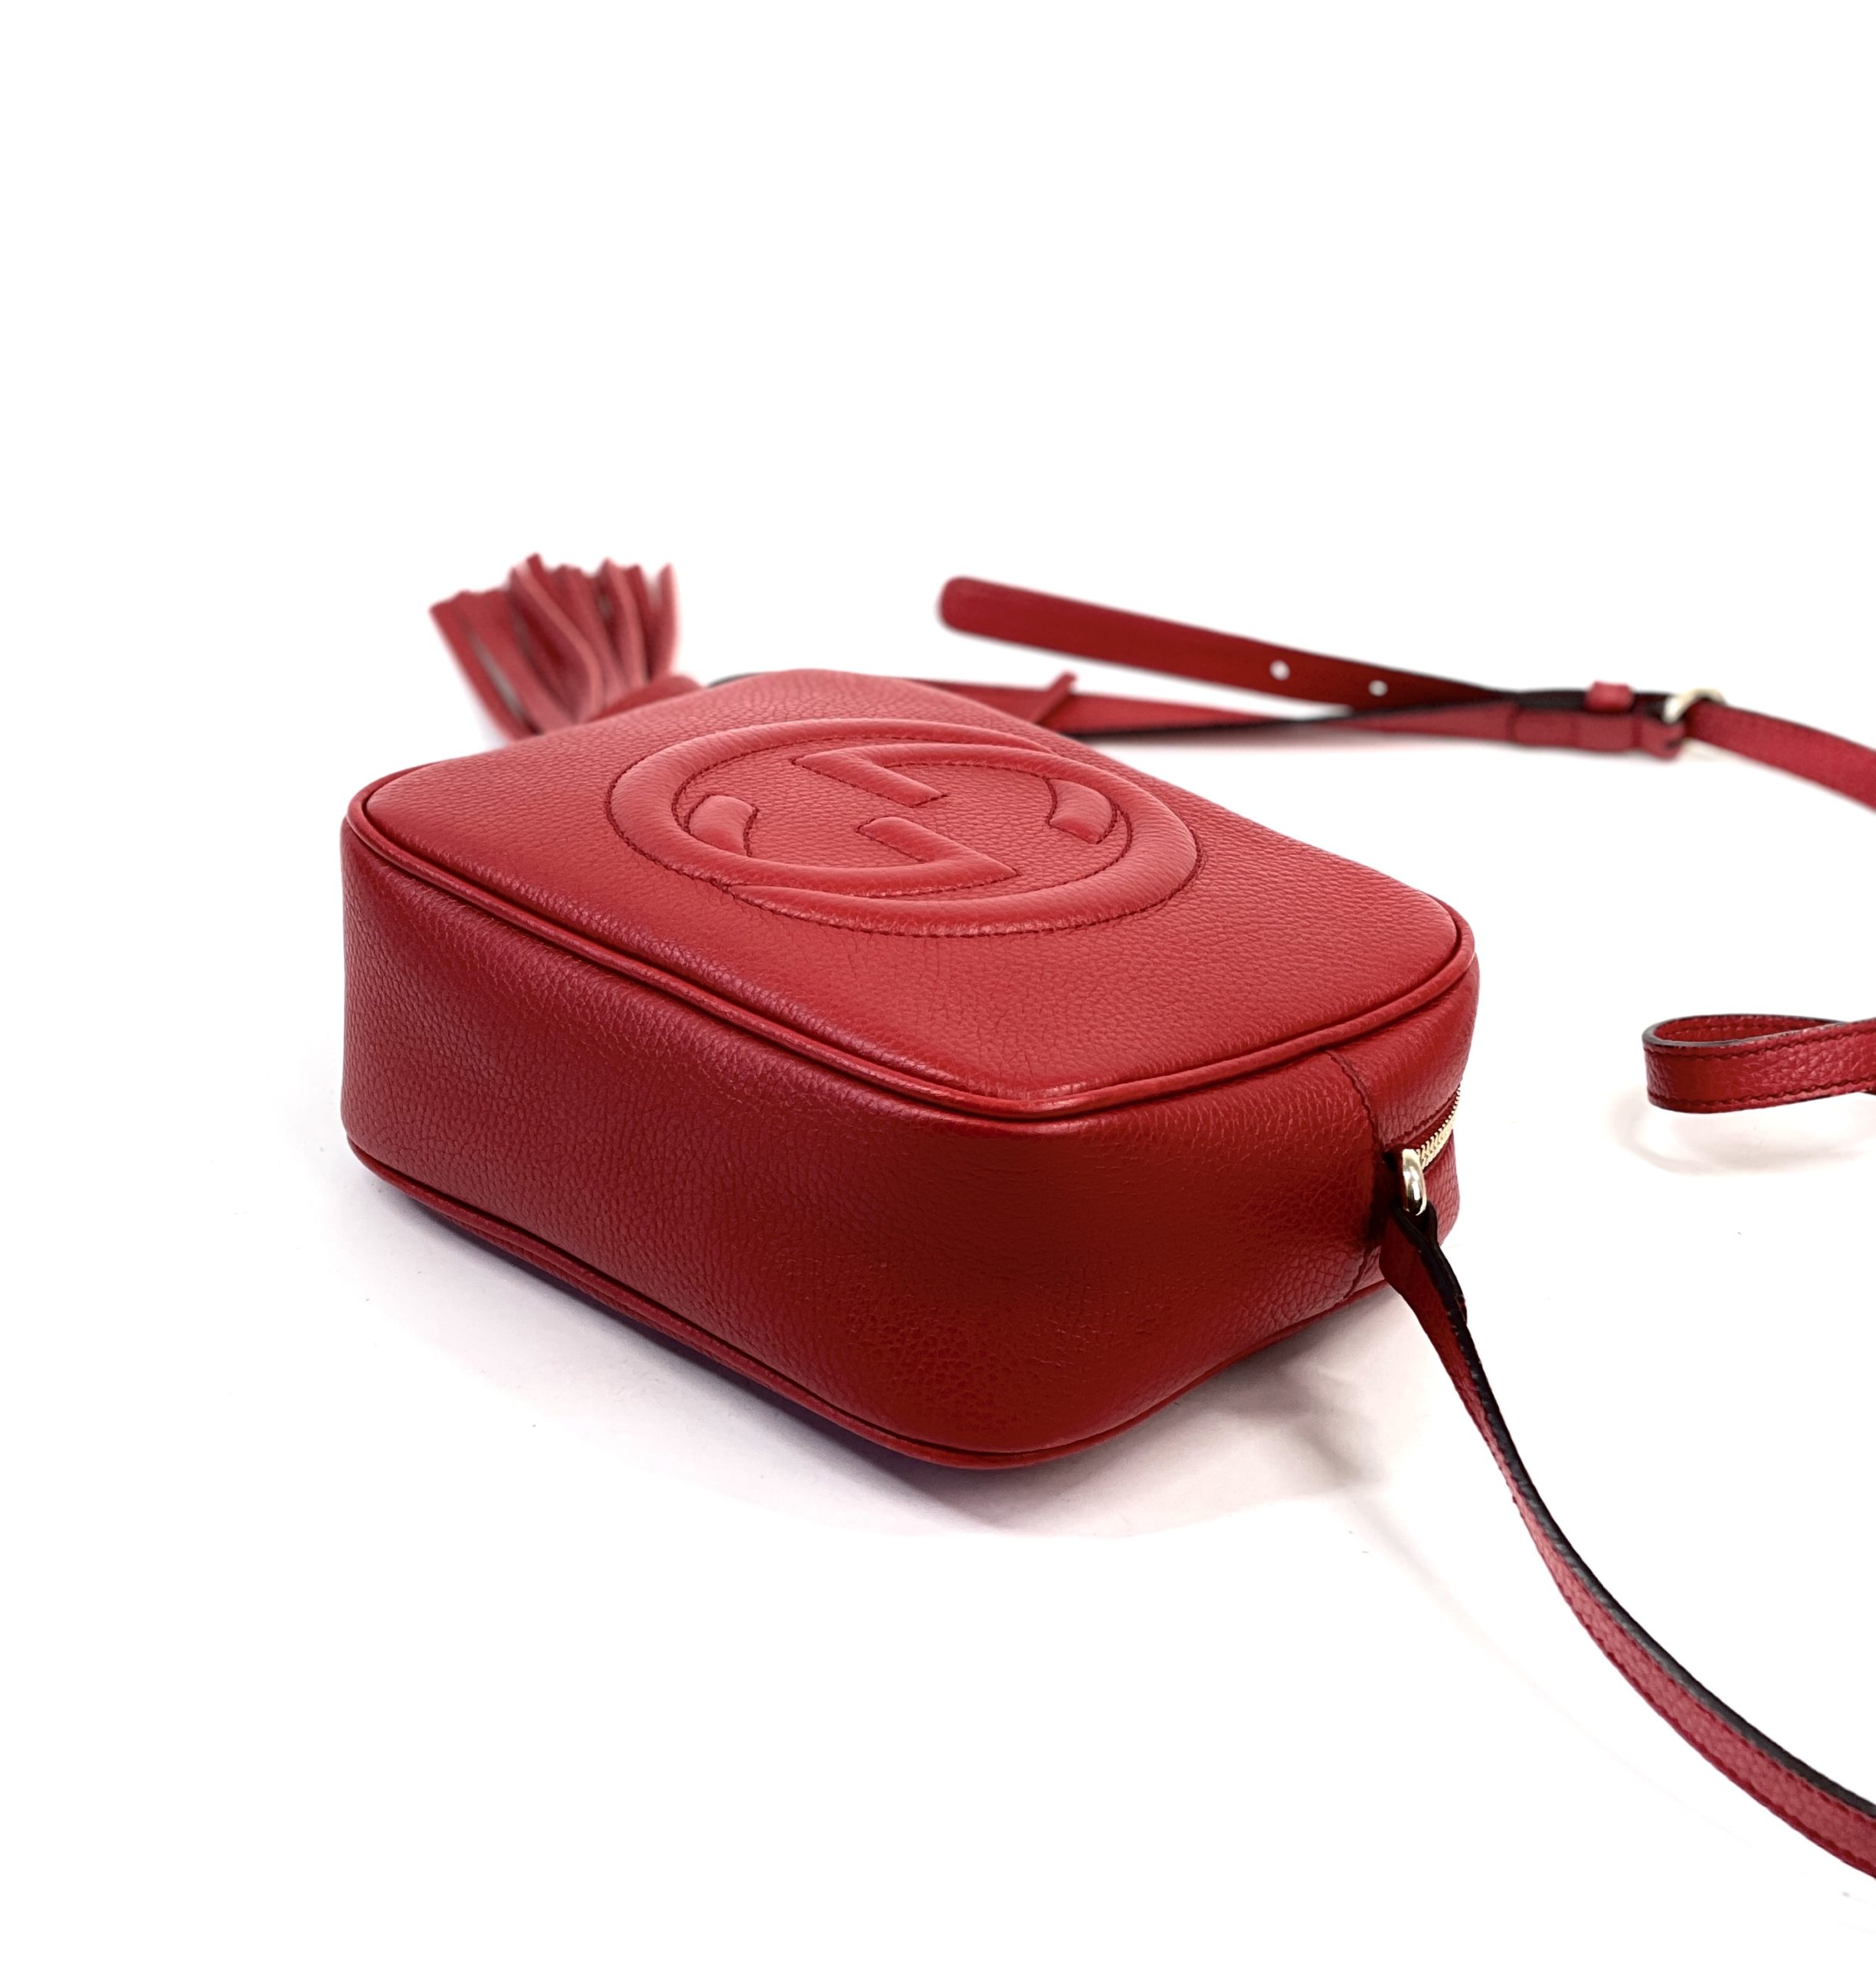 Gucci Soho Flame Red Leather Bag Soft Hobo Italy Handbag New